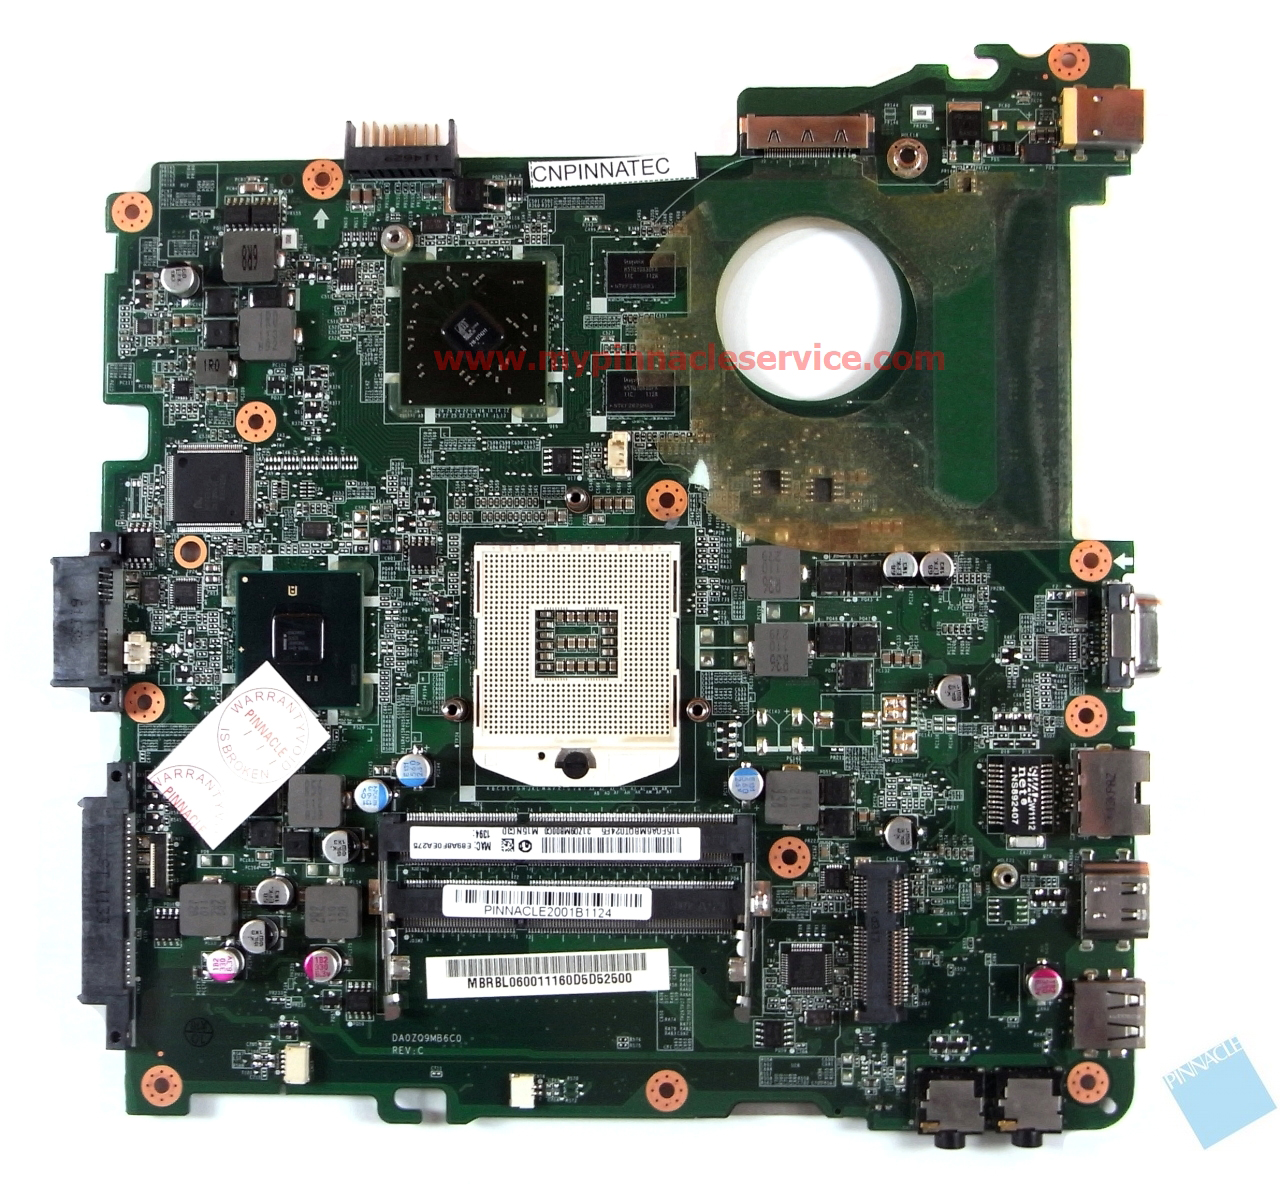 mbrbl06001-motherboard-for-acer-aspire-4738-emachines-d732-da0zq9mb6c0-rimg0020-1.jpg